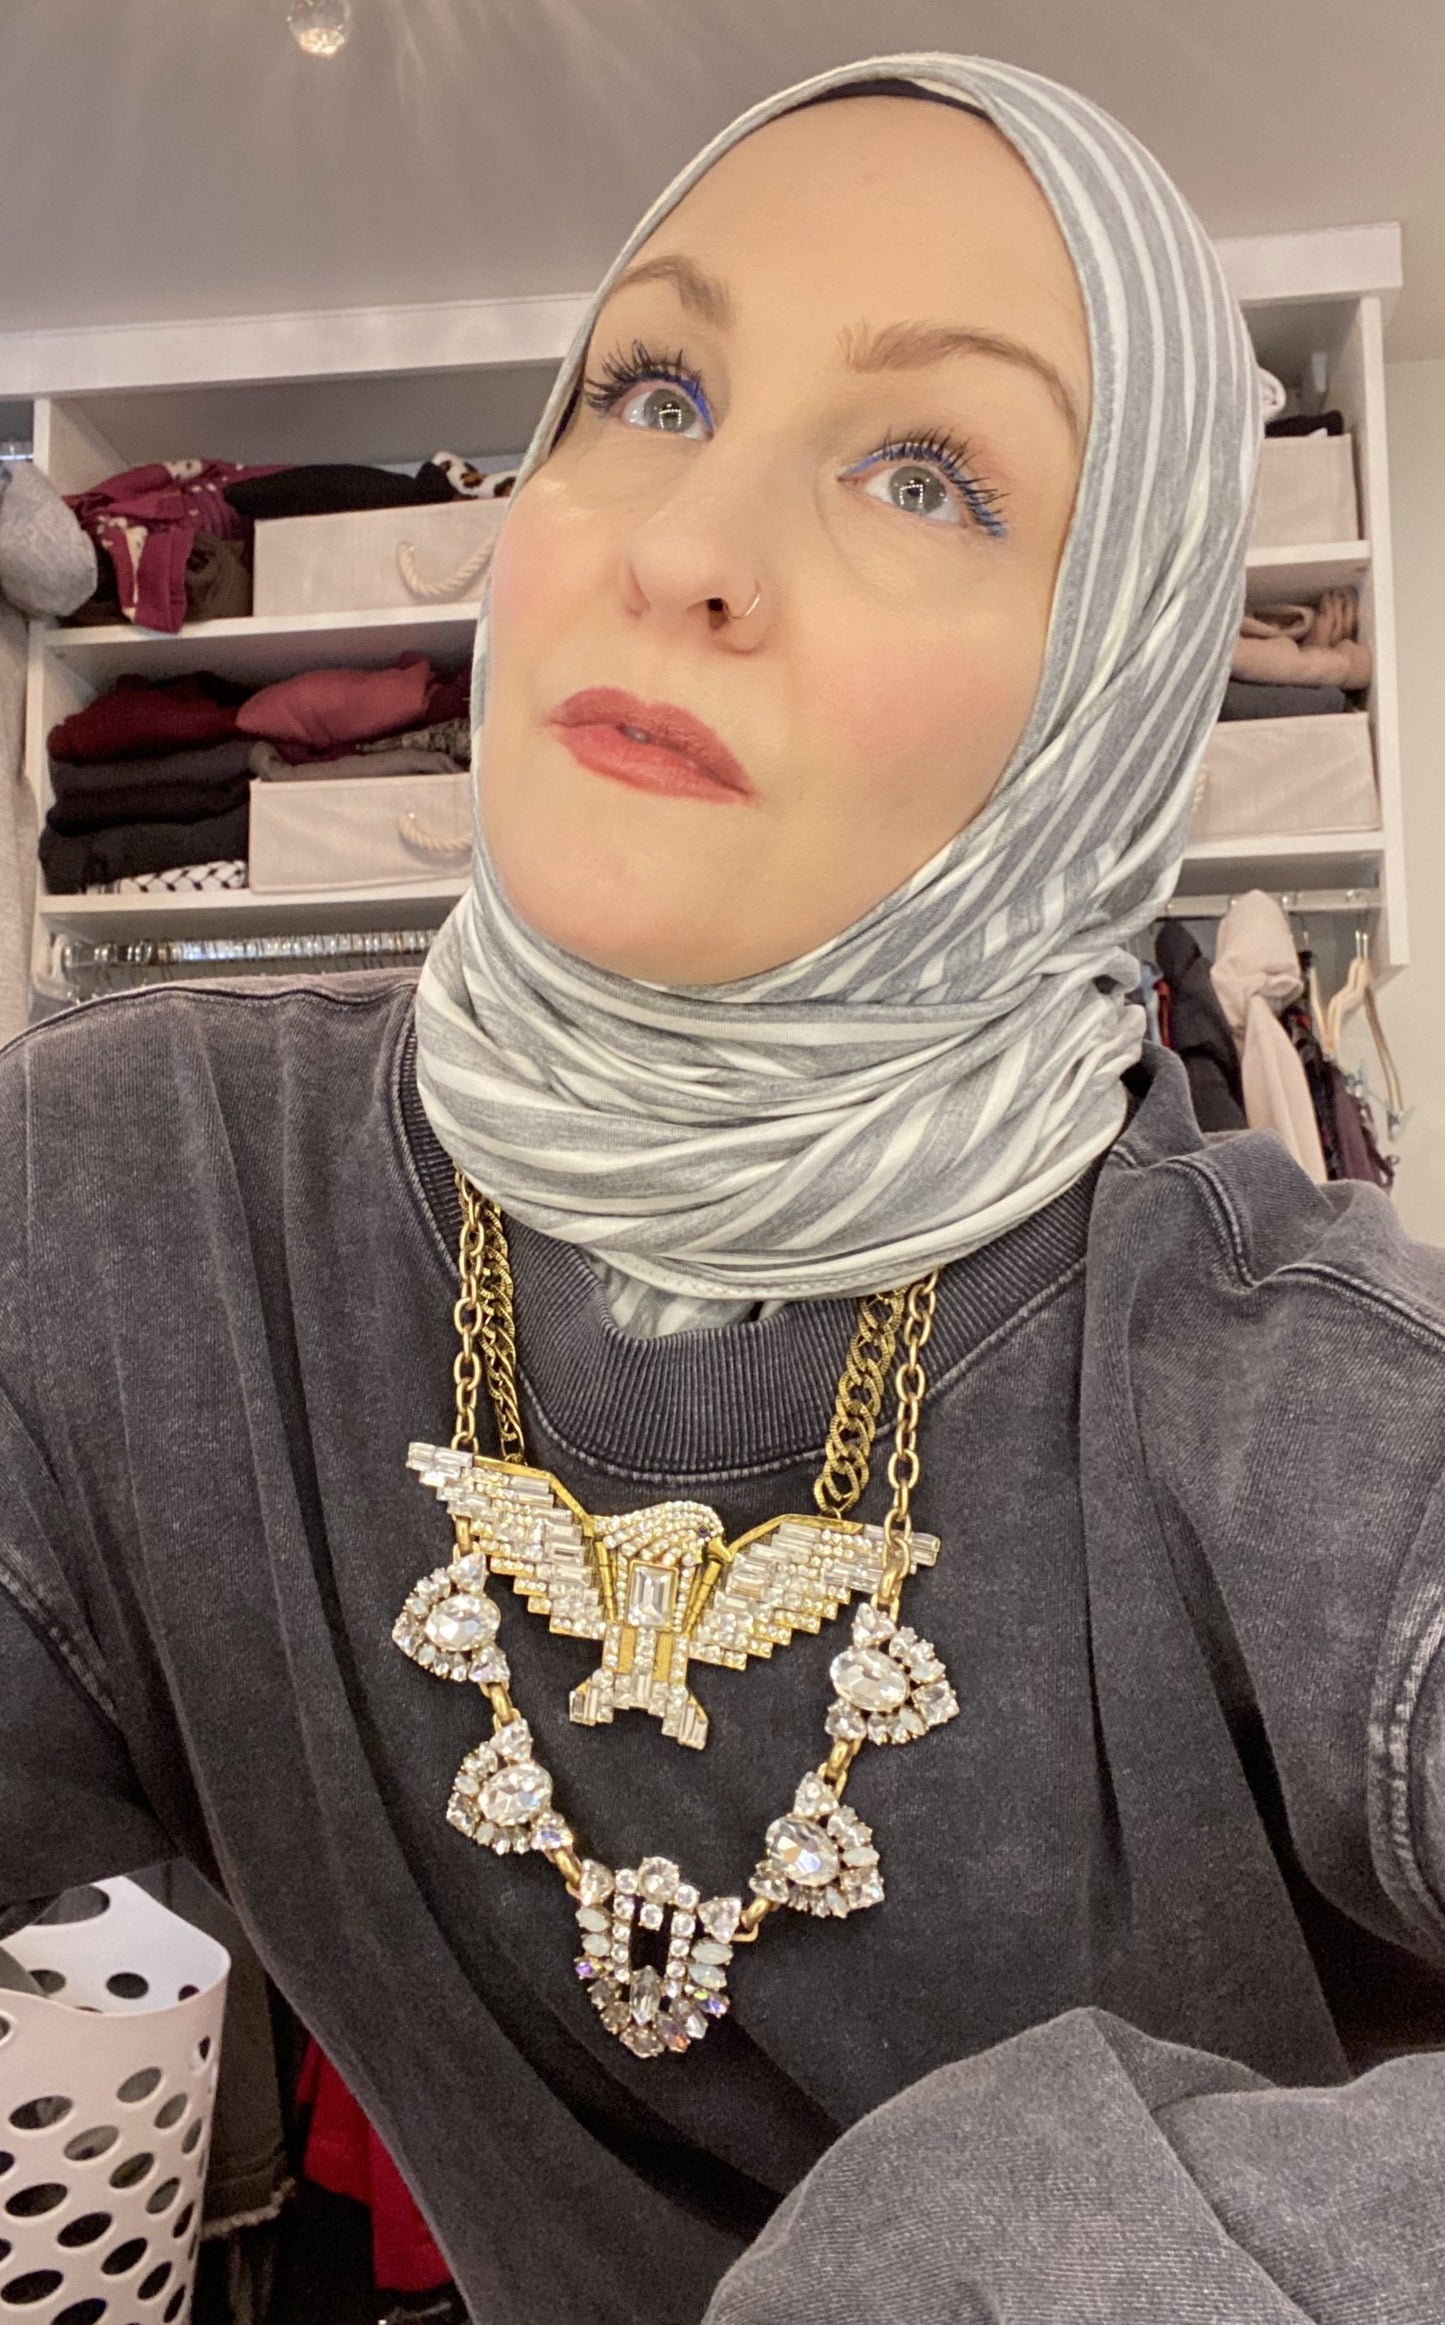 WovenJersey Hijab: Valley Girl